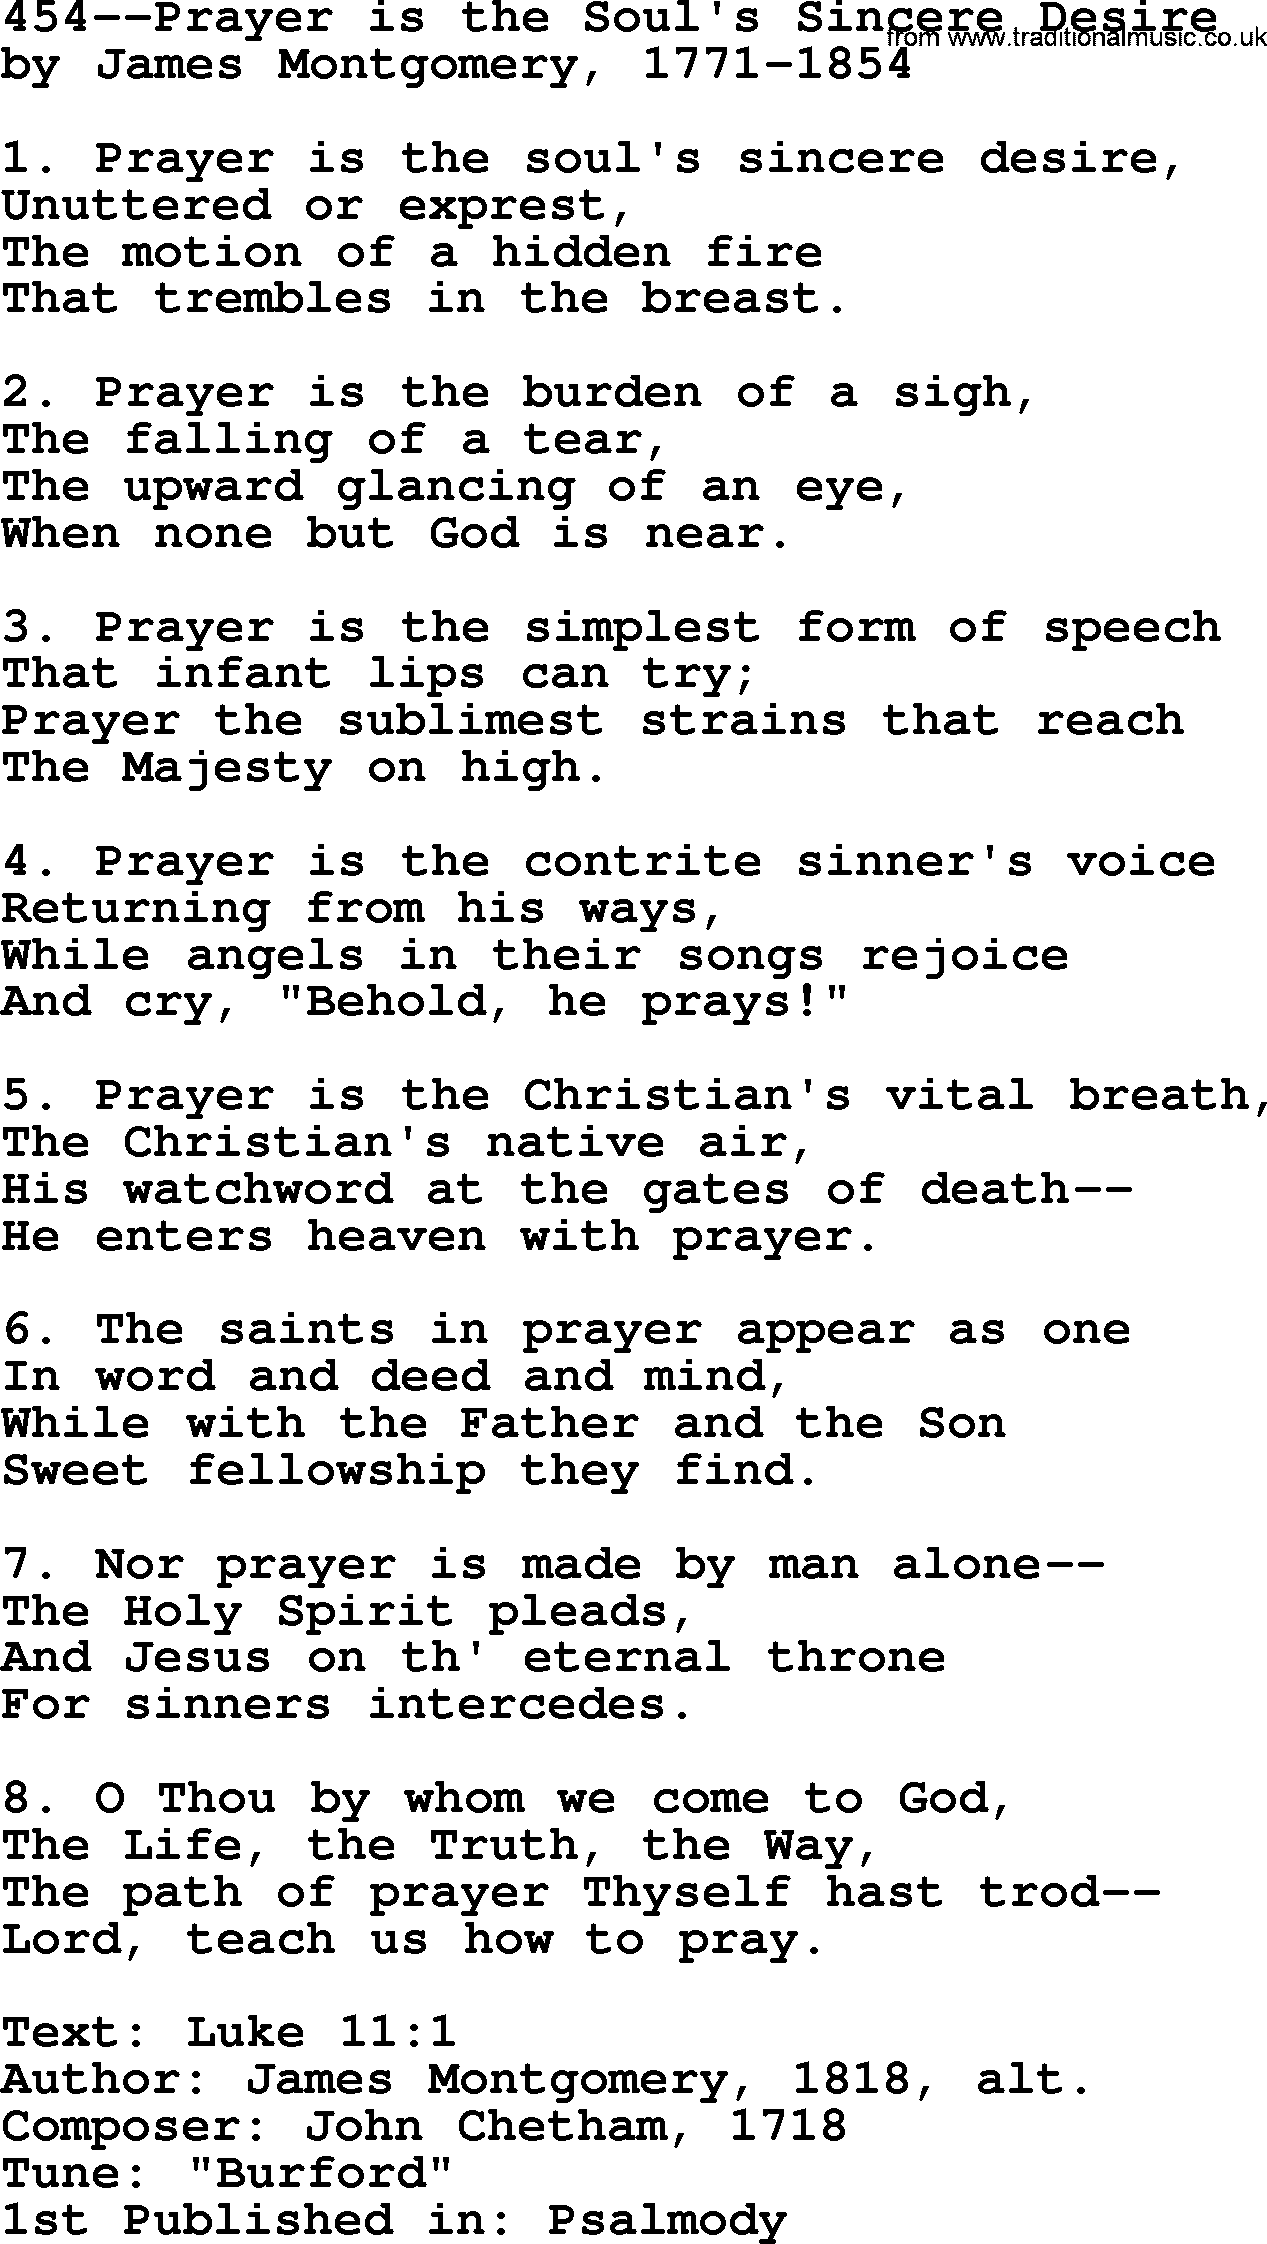 Lutheran Hymn: 454--Prayer is the Soul's Sincere Desire.txt lyrics with PDF